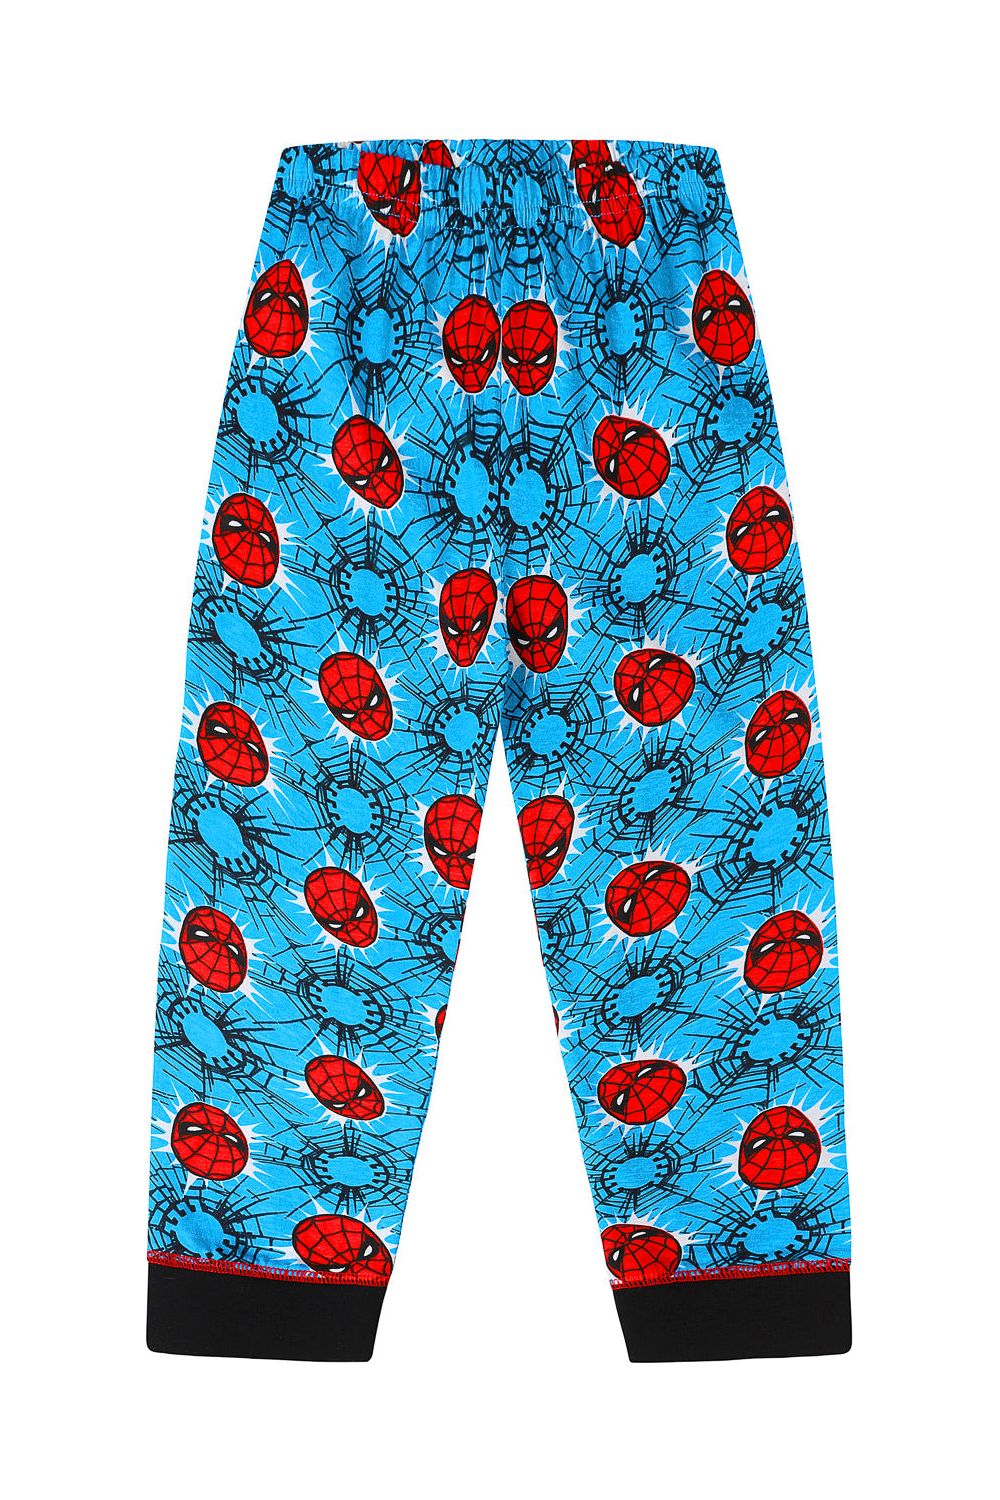 Boys Official Marvel Spiderman Blue Red Long Pyjamas - Pyjamas.com